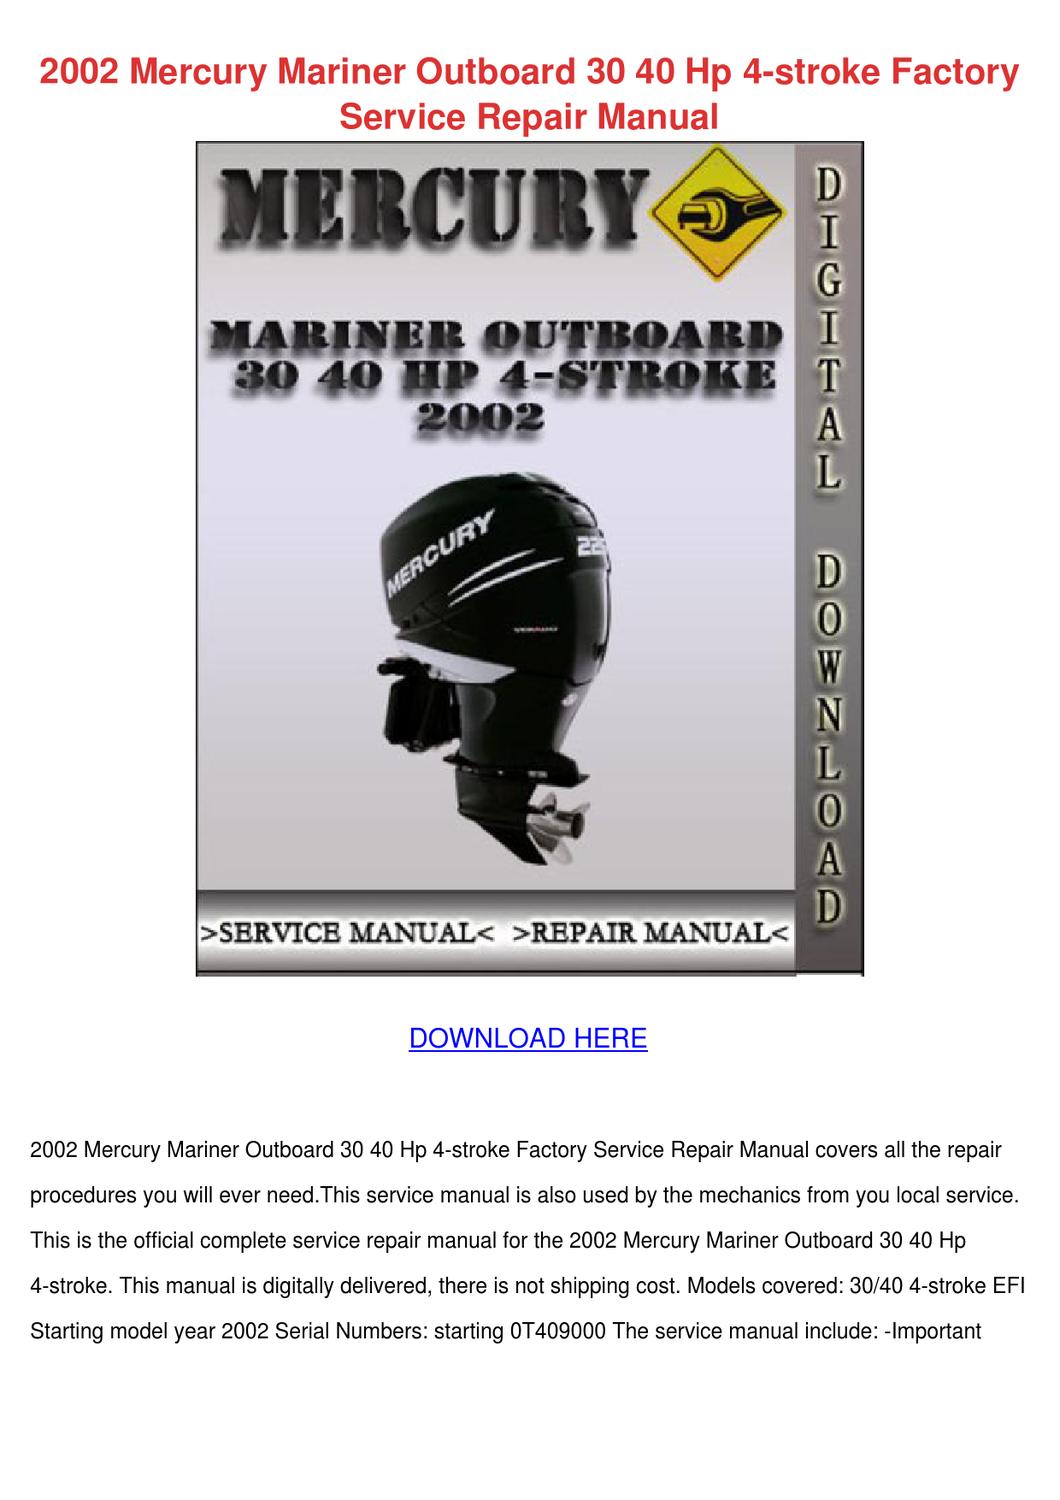 mercury 40 hp outboard service manual pdf